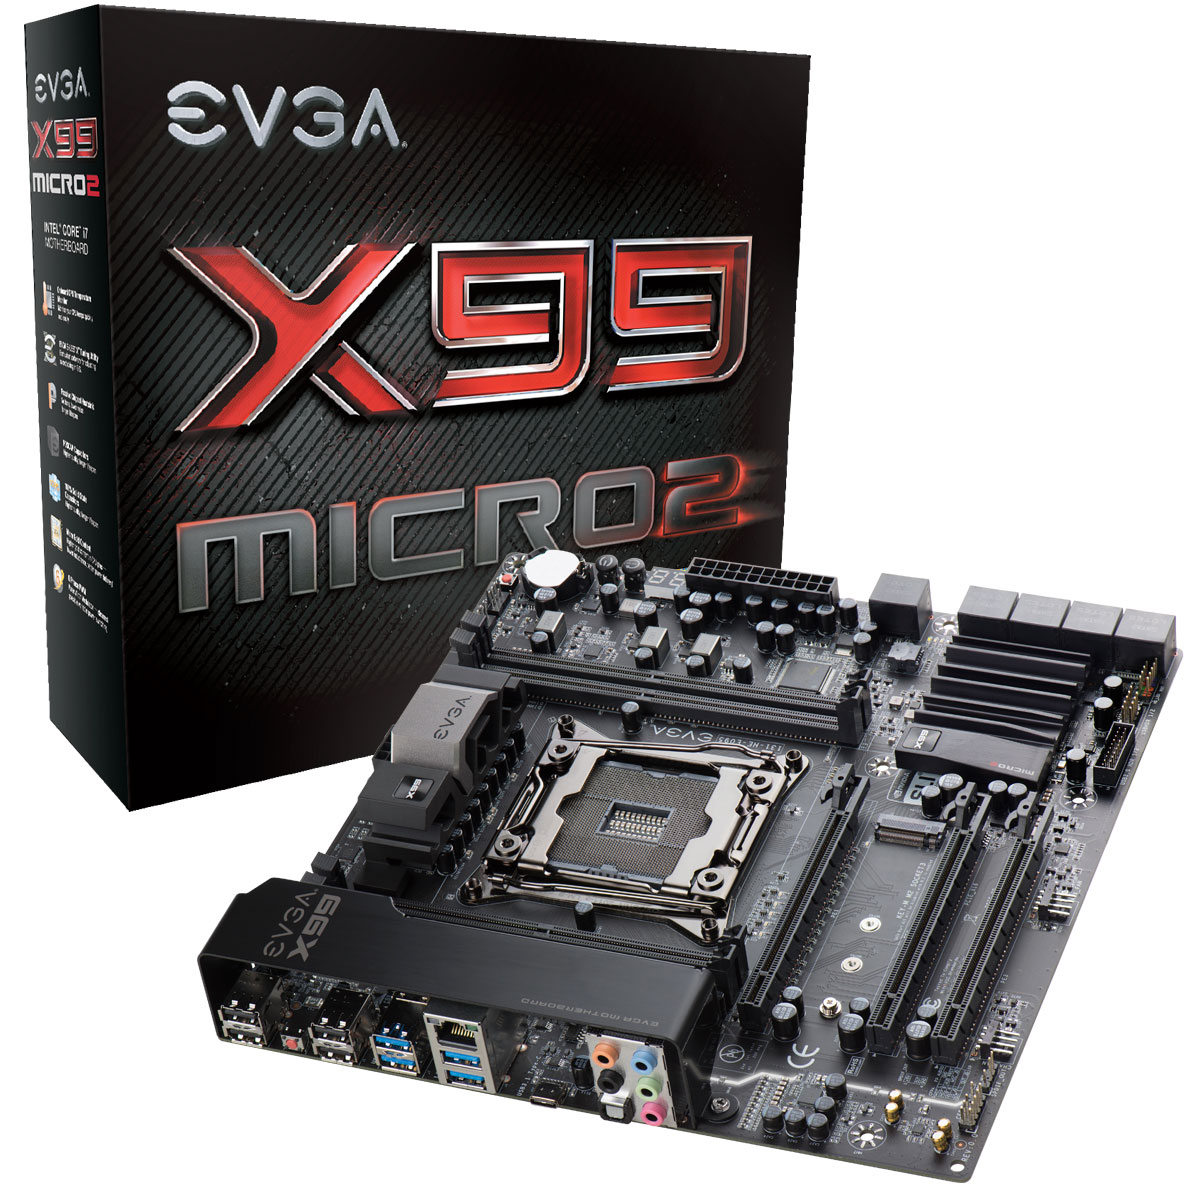 EVGA X99 Micro2 and box